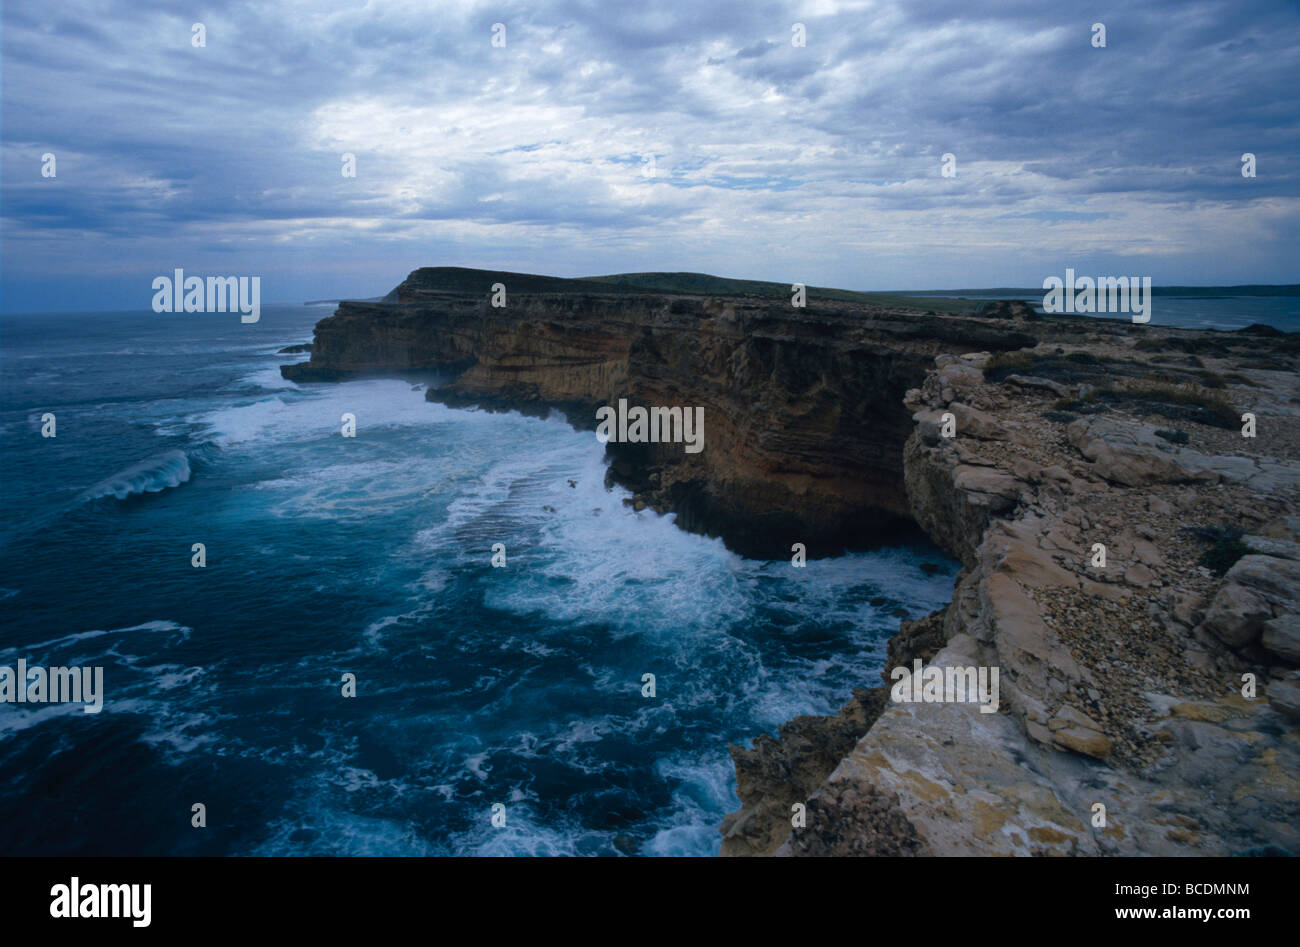 Una penisola calcarea sporge in una tempesta devastò Oceano Meridionale. Foto Stock